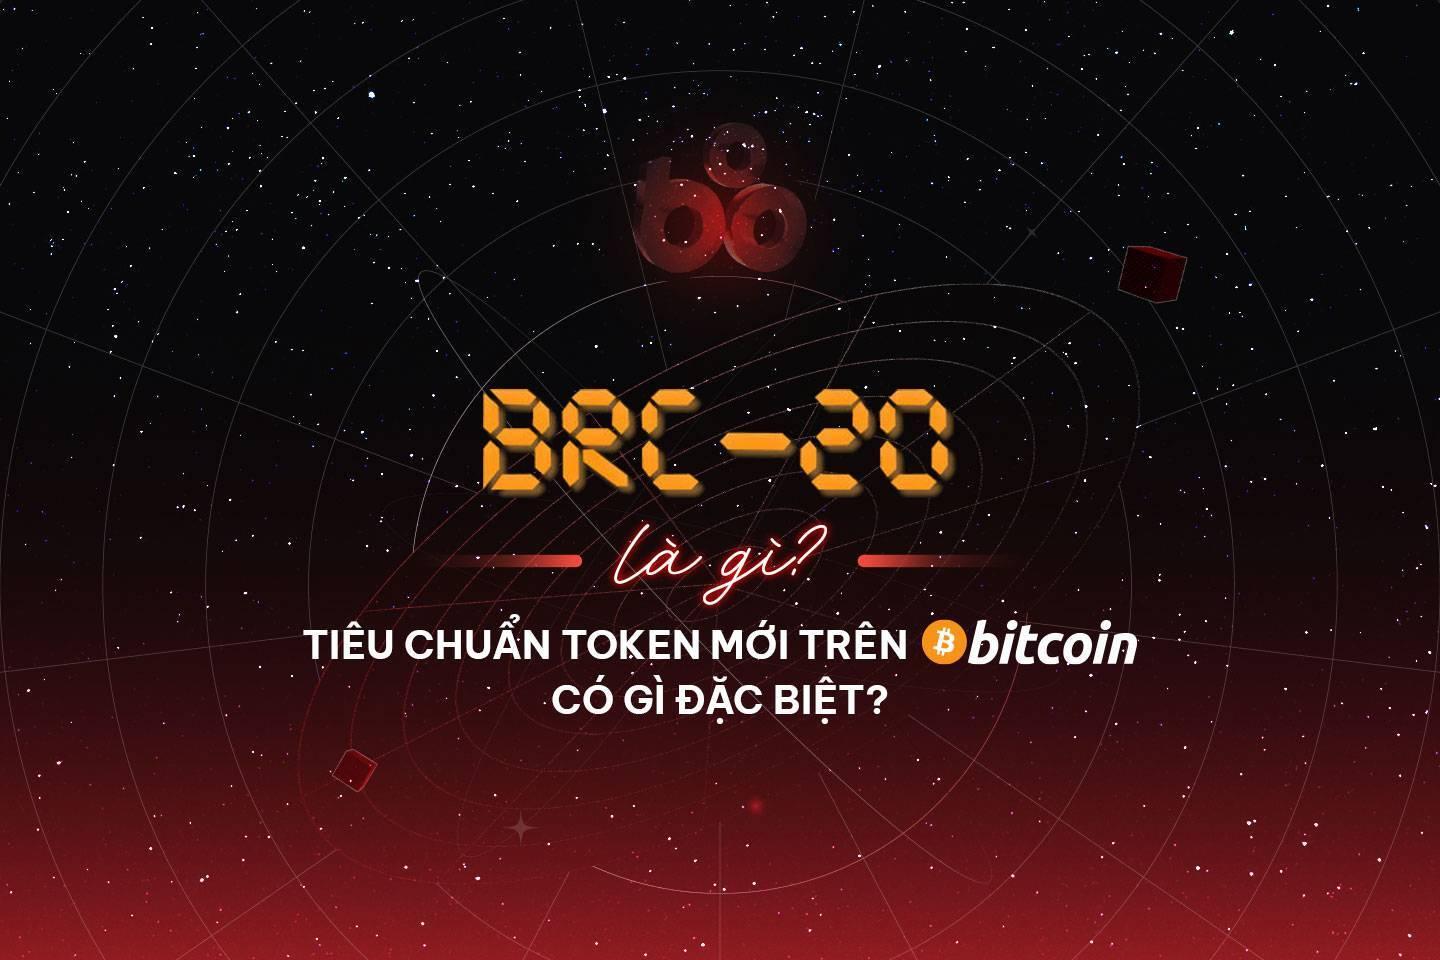 brc-20-la-gi-tieu-chuan-token-moi-tren-bitcoin-co-gi-dac-biet